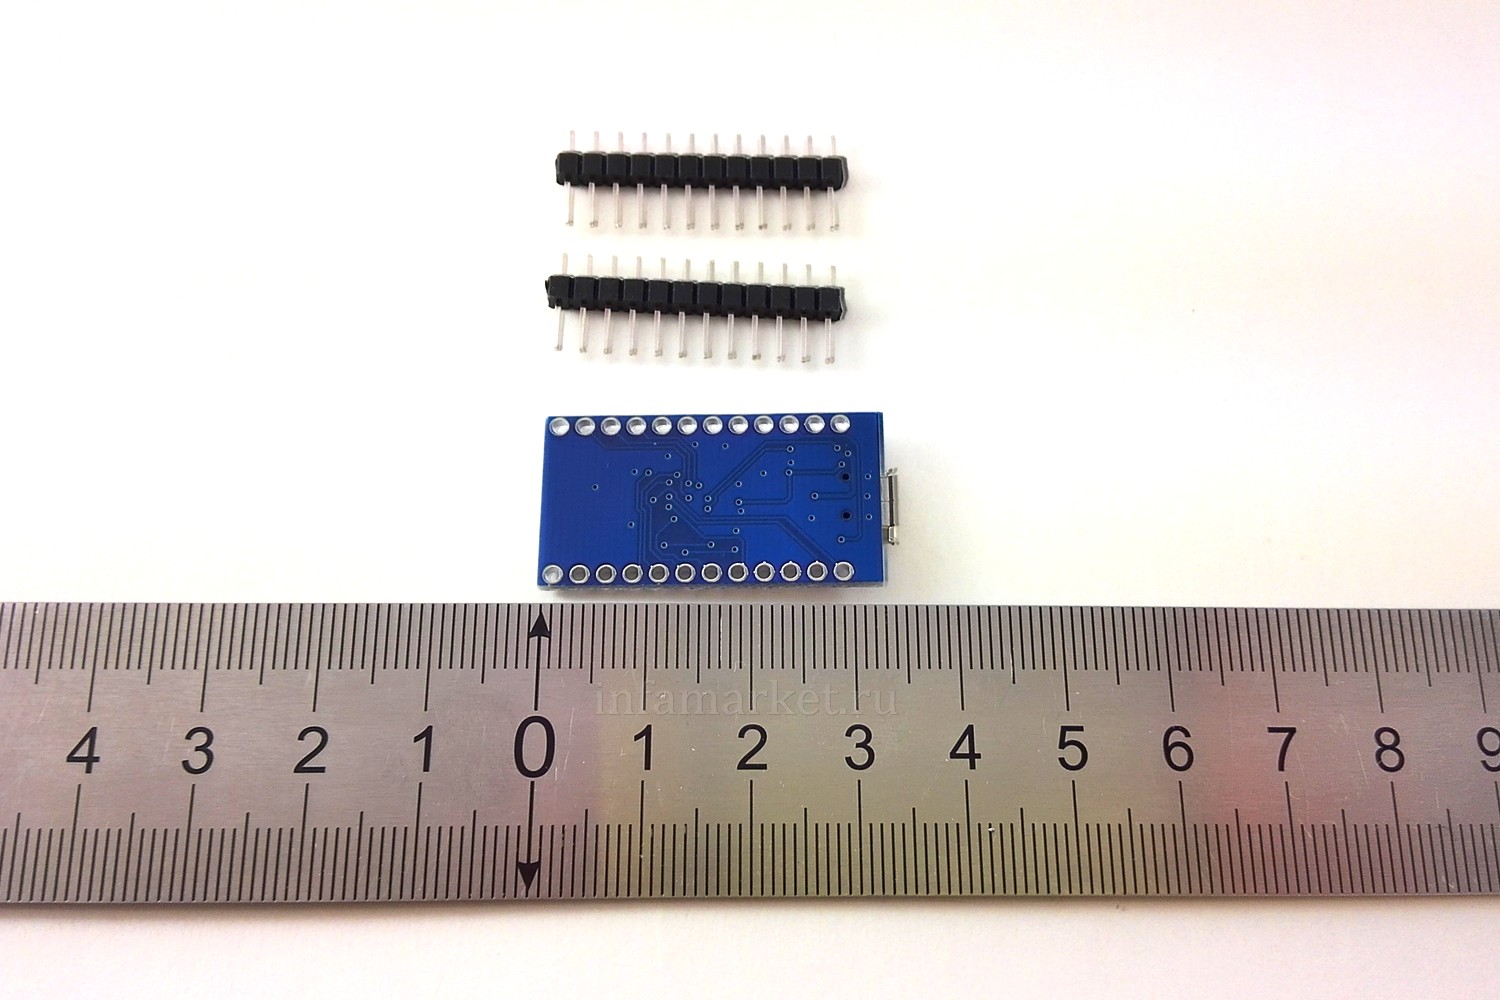 Arduino Pro Micro 5V 16MHz (вид сзади)